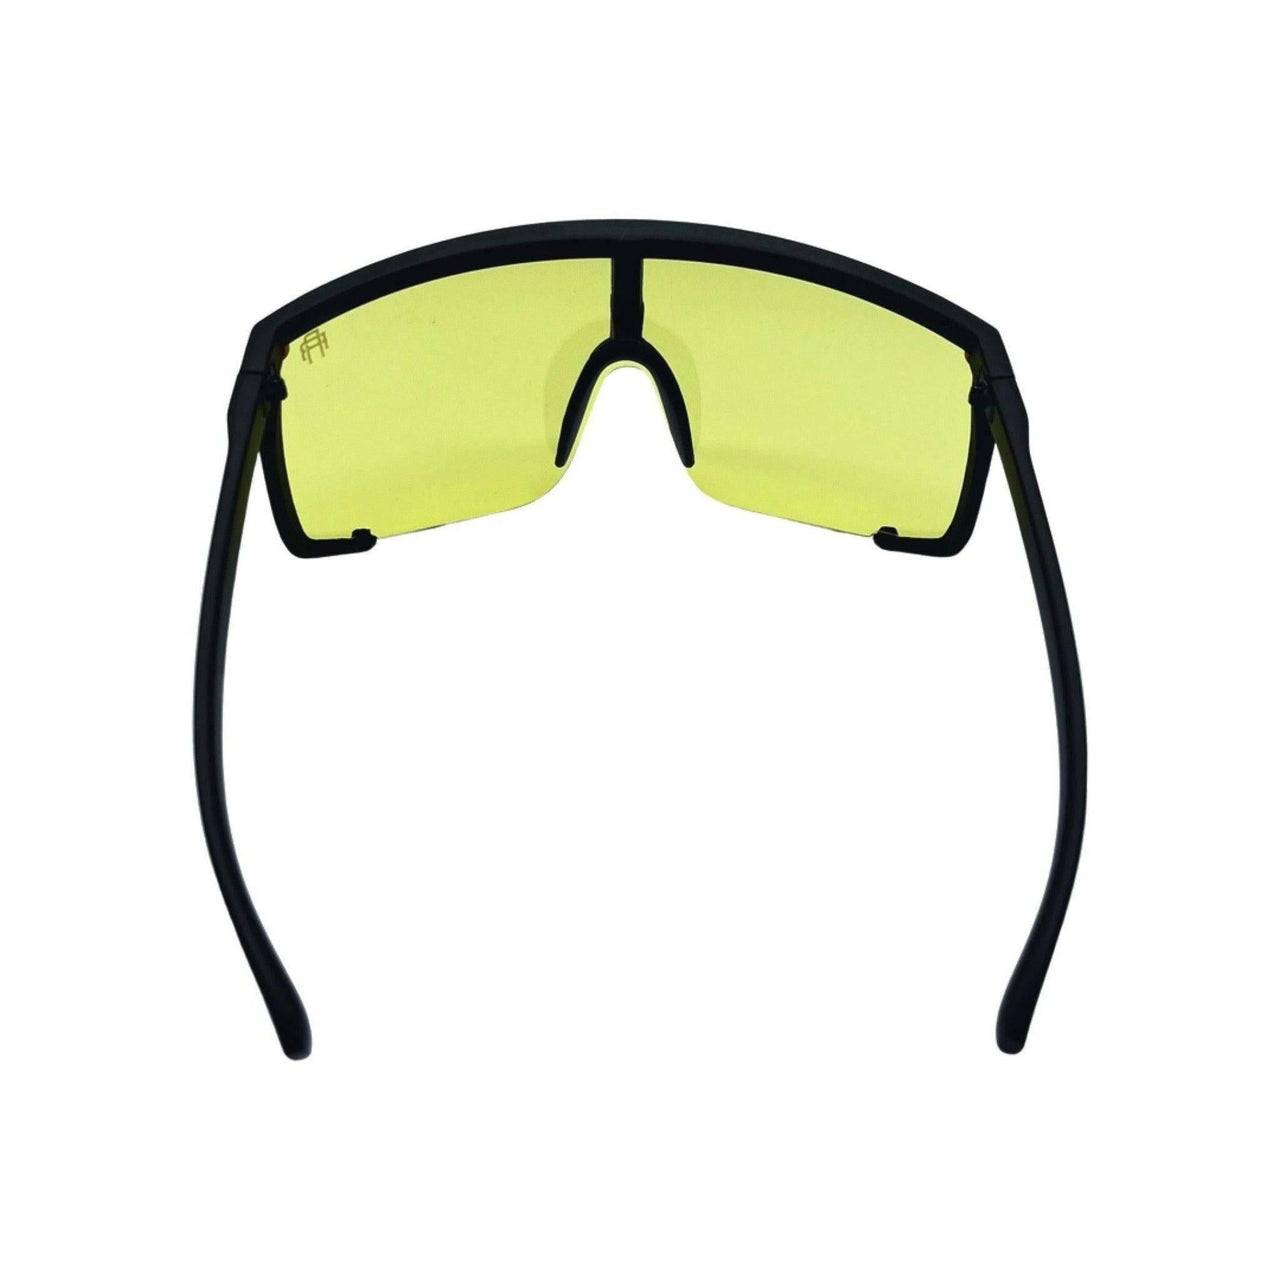 Steezy Yellow Transparent Sunglasses